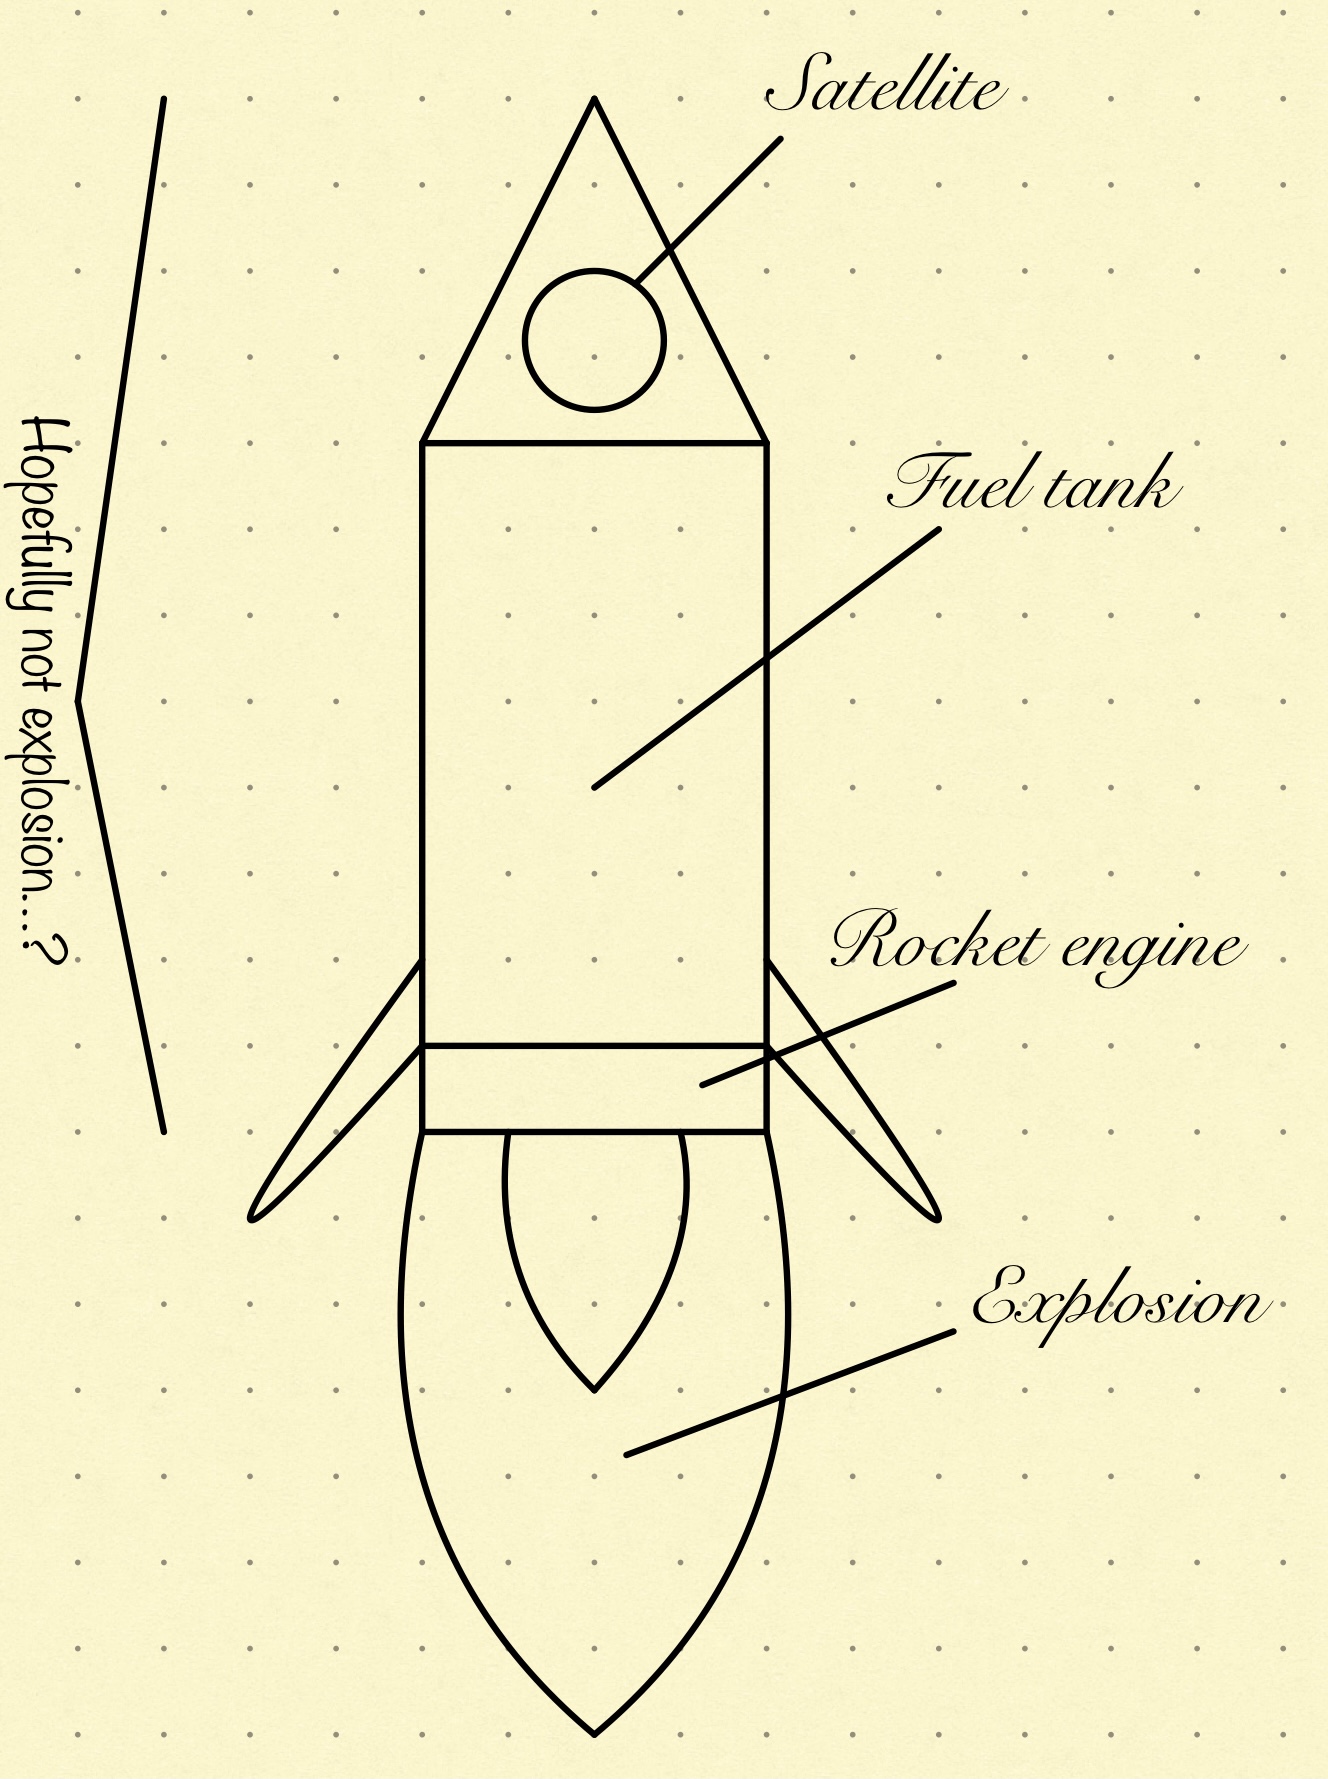 Spaceship sketch